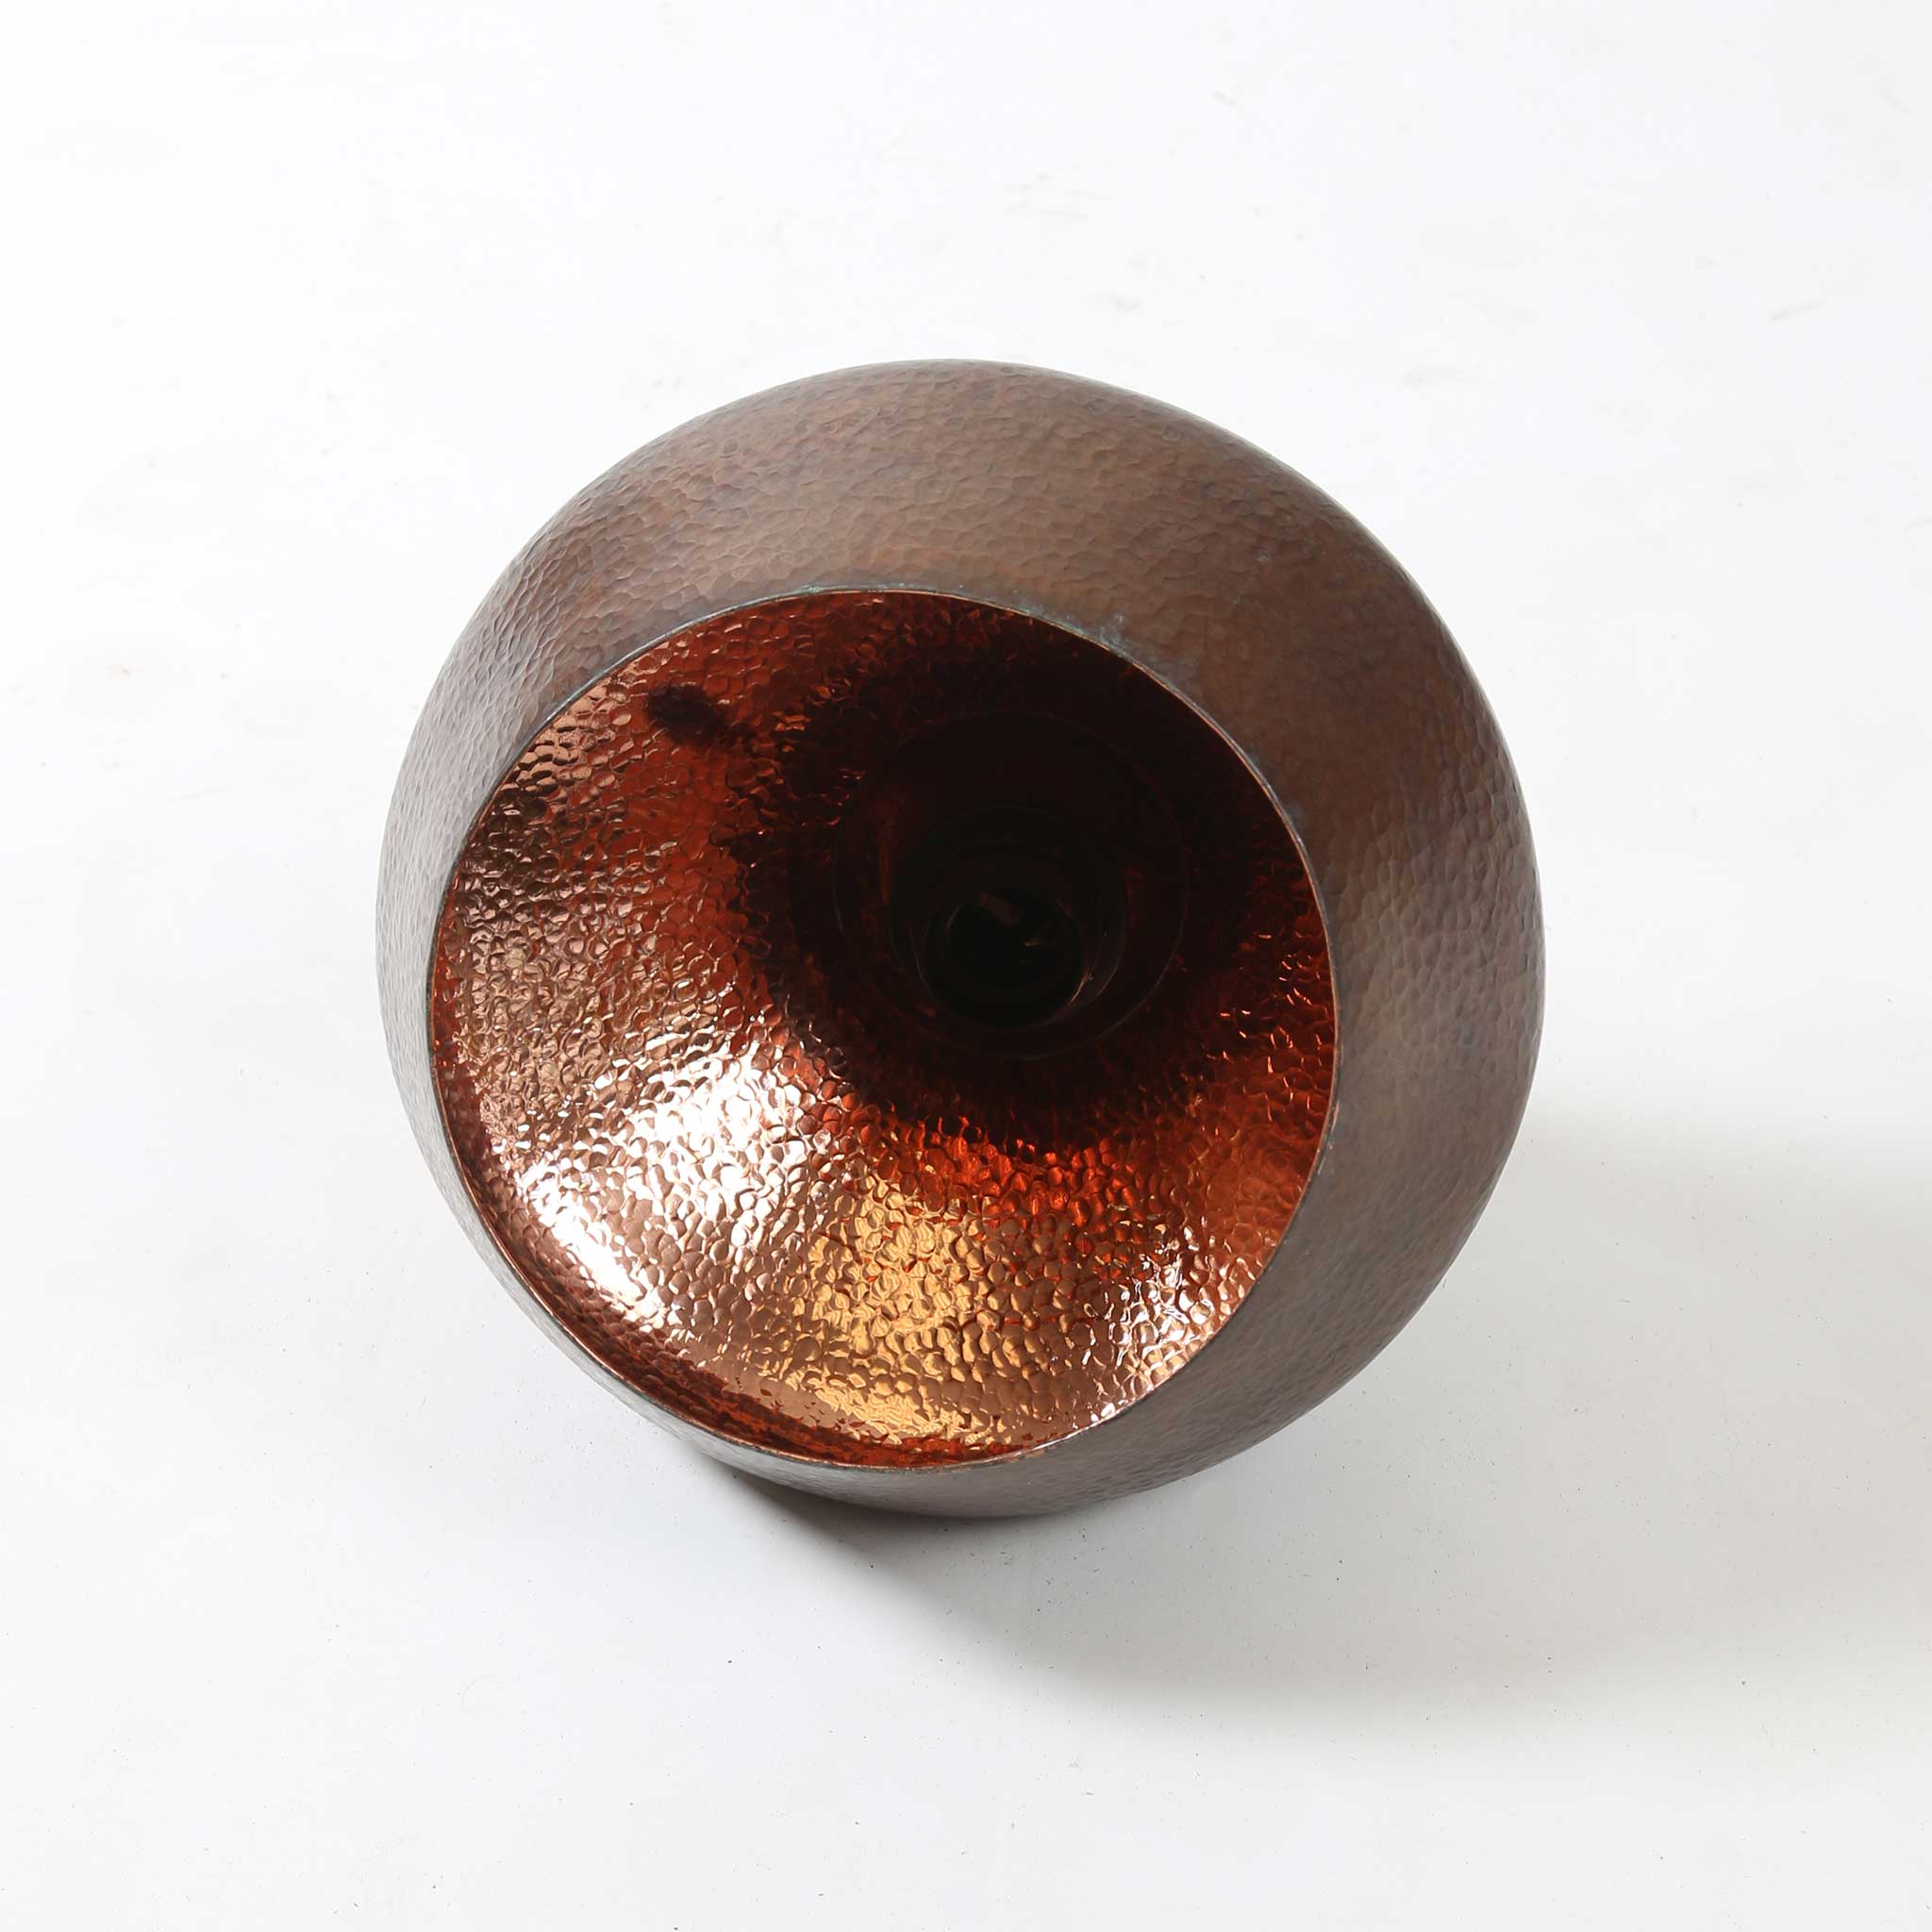 Morrocan Style Handbeaten Copper Light Shades